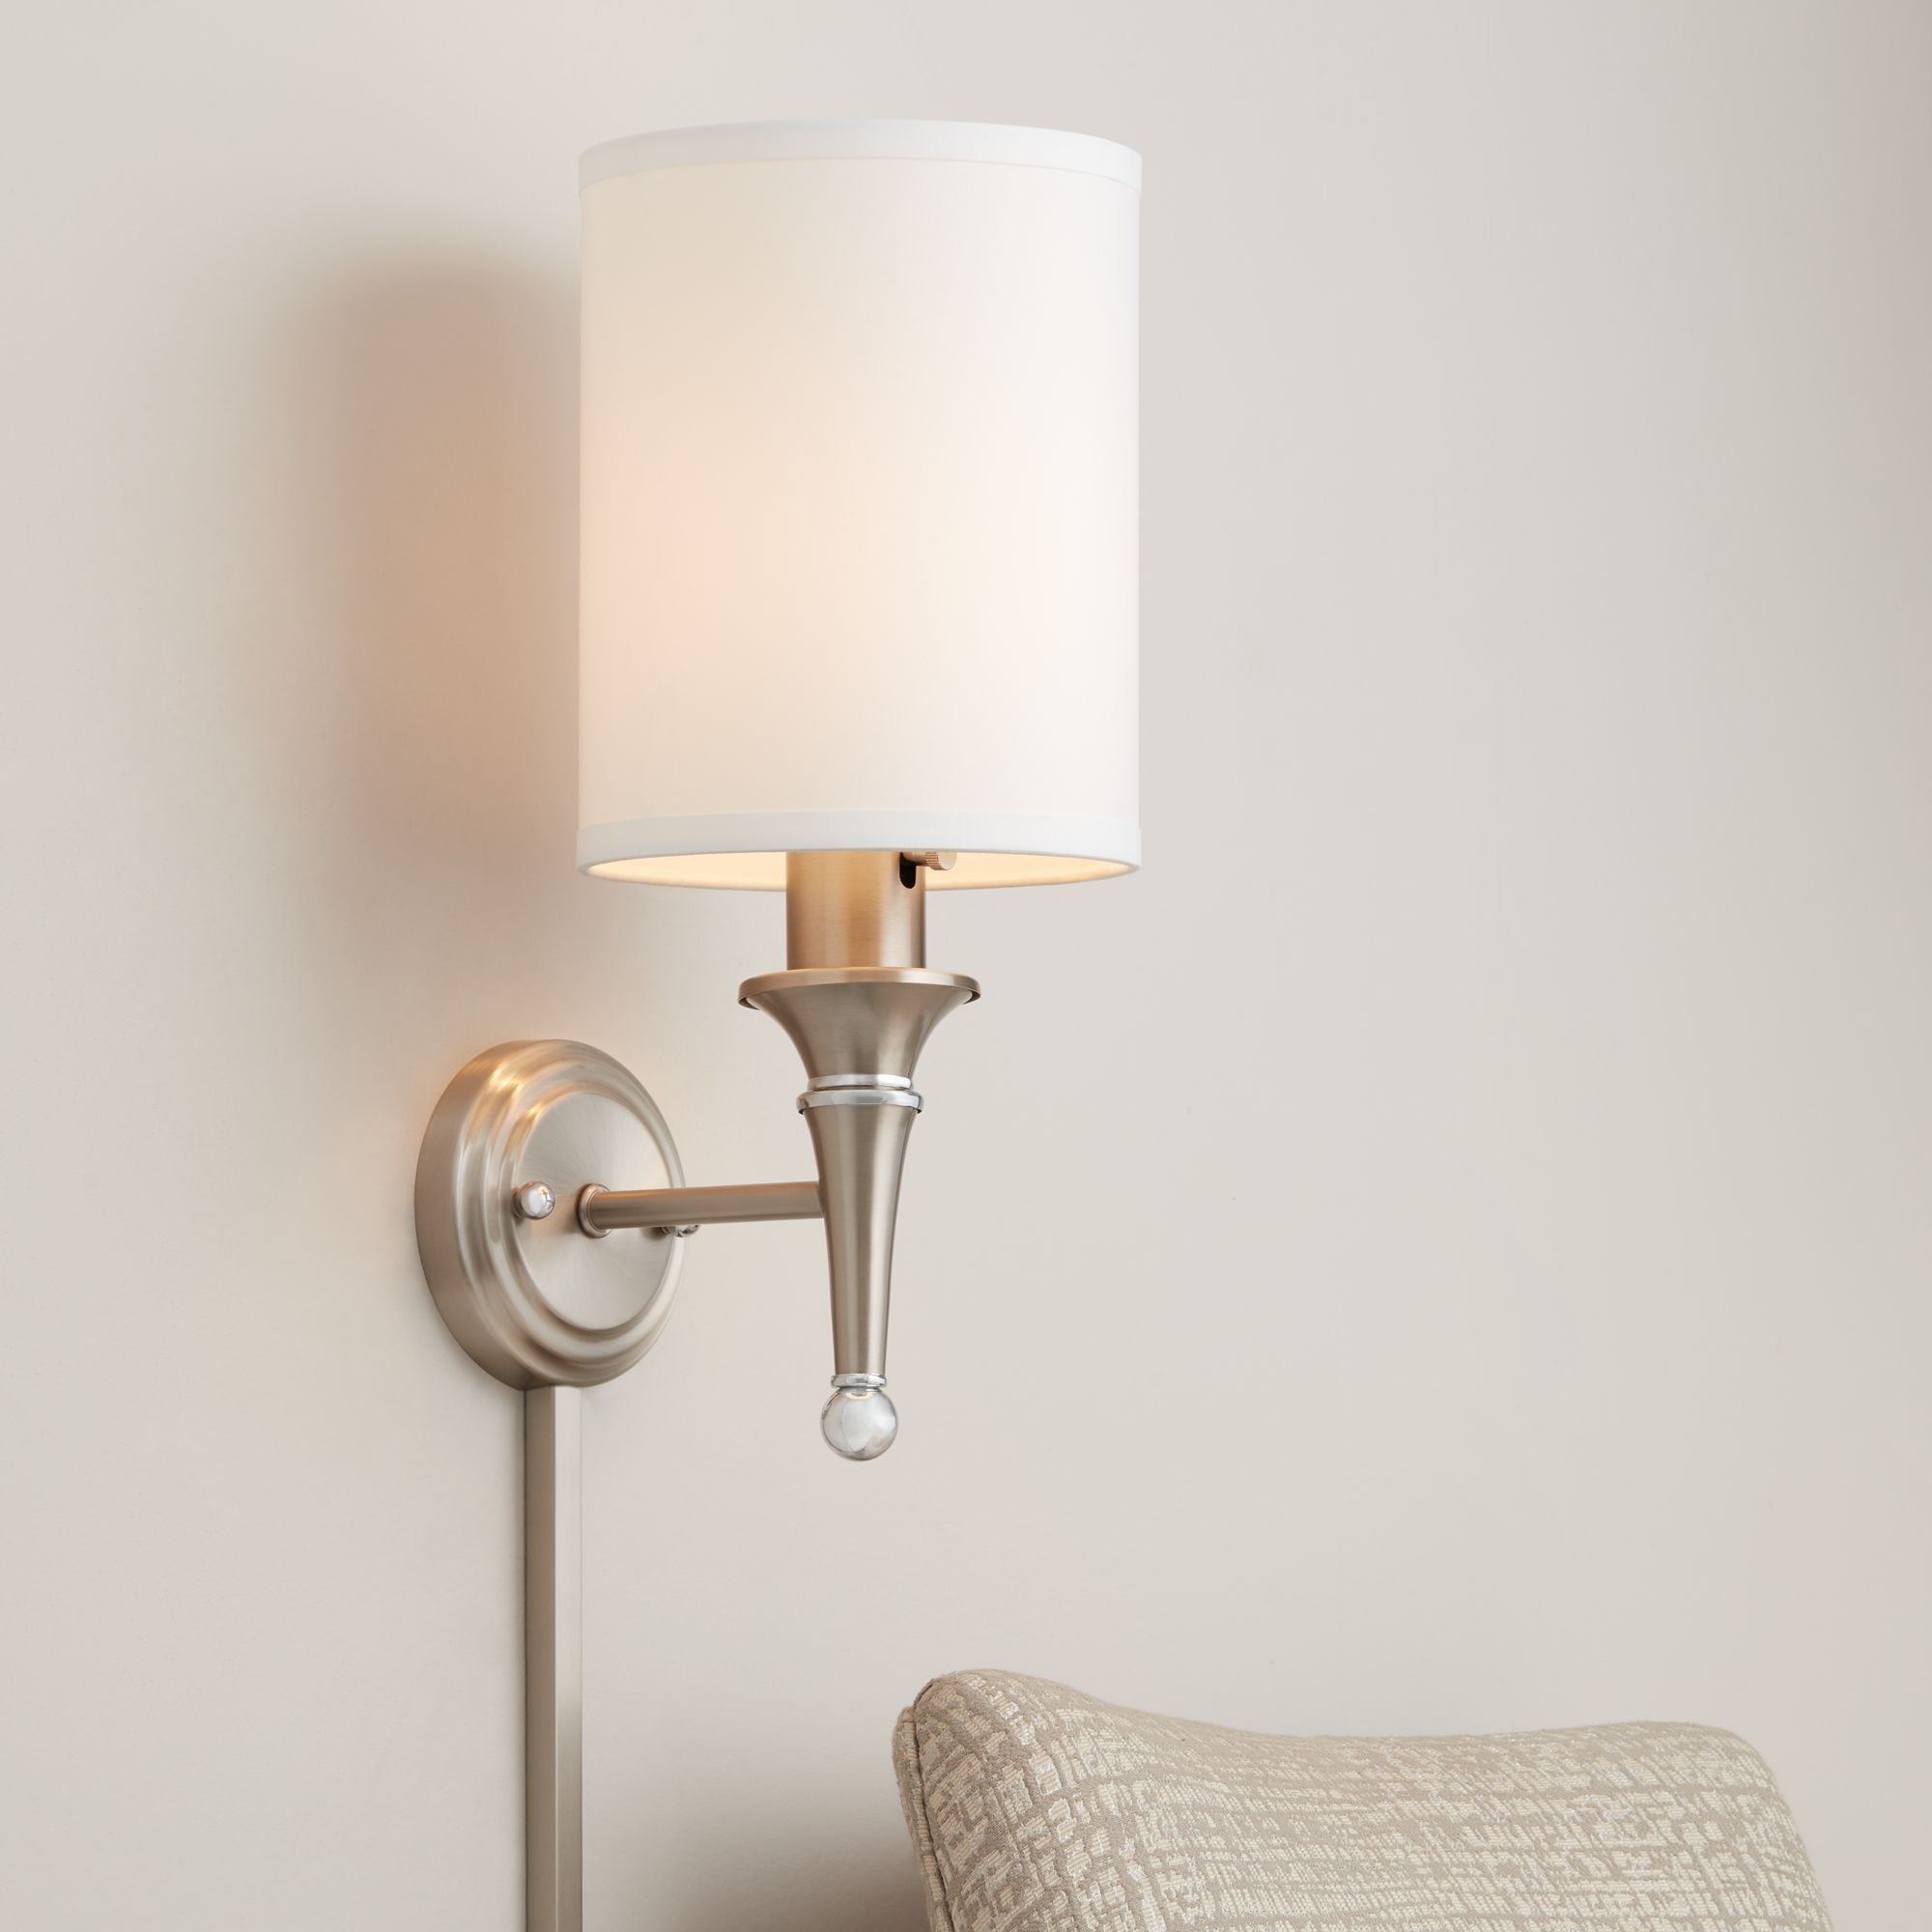 Possini Euro Design Modern Wall Lamp Brushed Nickel Plug In Light